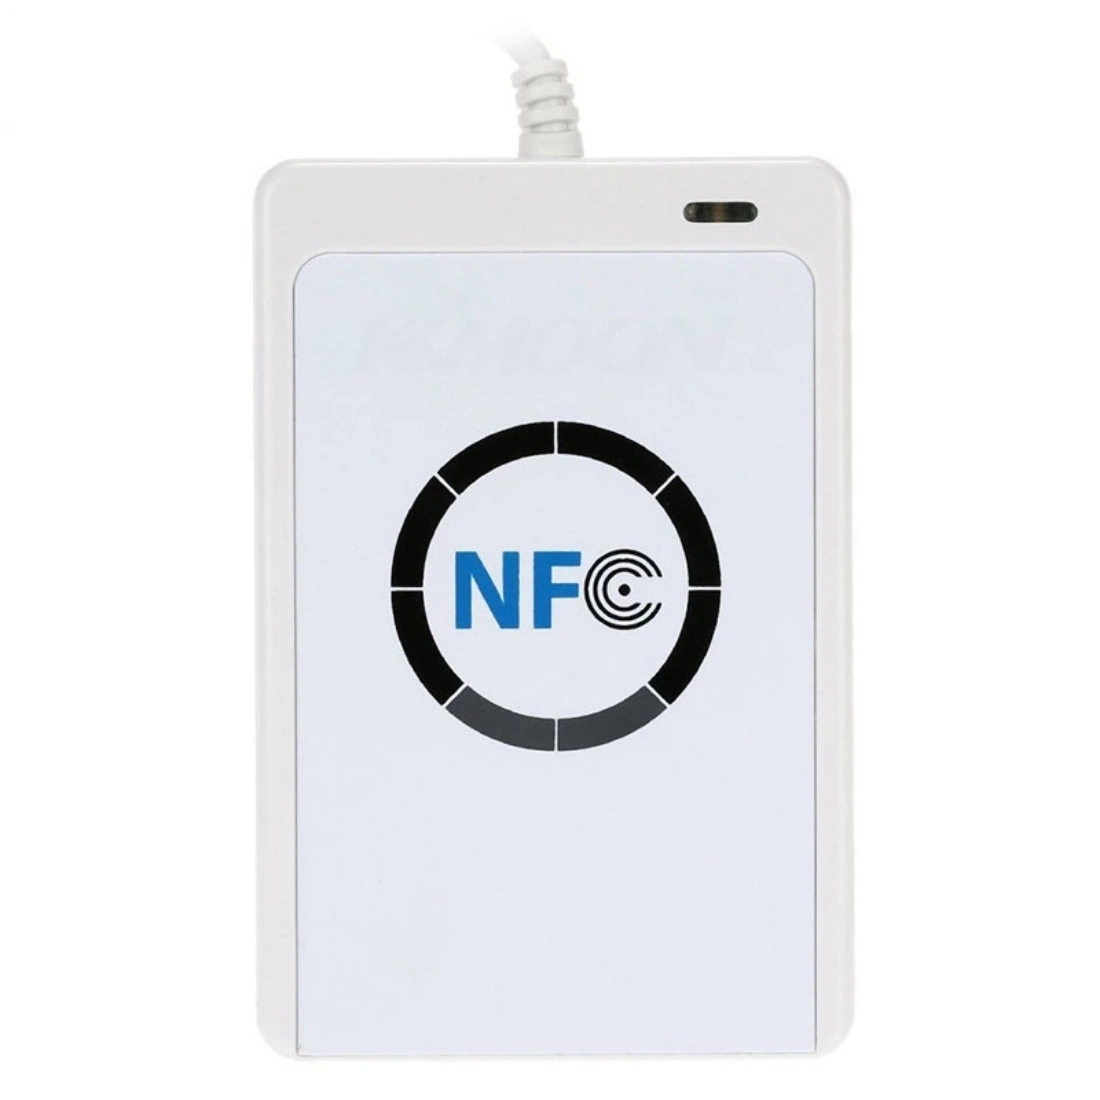 NFC Card Reader 13.56MHz Contactless IC Card Reader Smart Card Reader